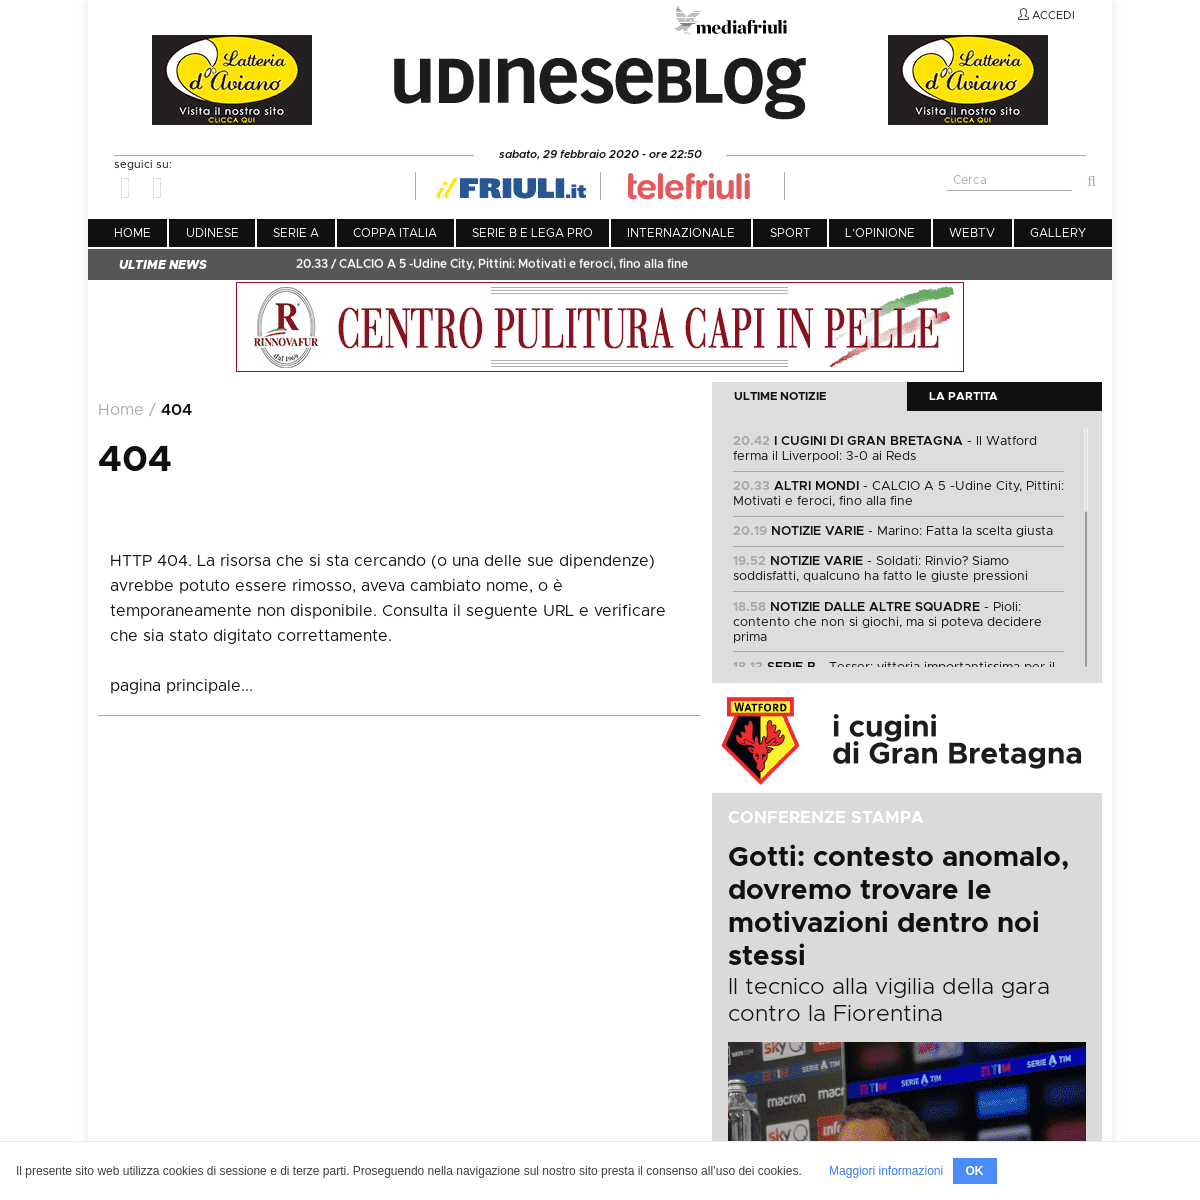 A complete backup of www.udineseblog.it/articolo/notizie-varie/rinvio-udinese-fiorentina